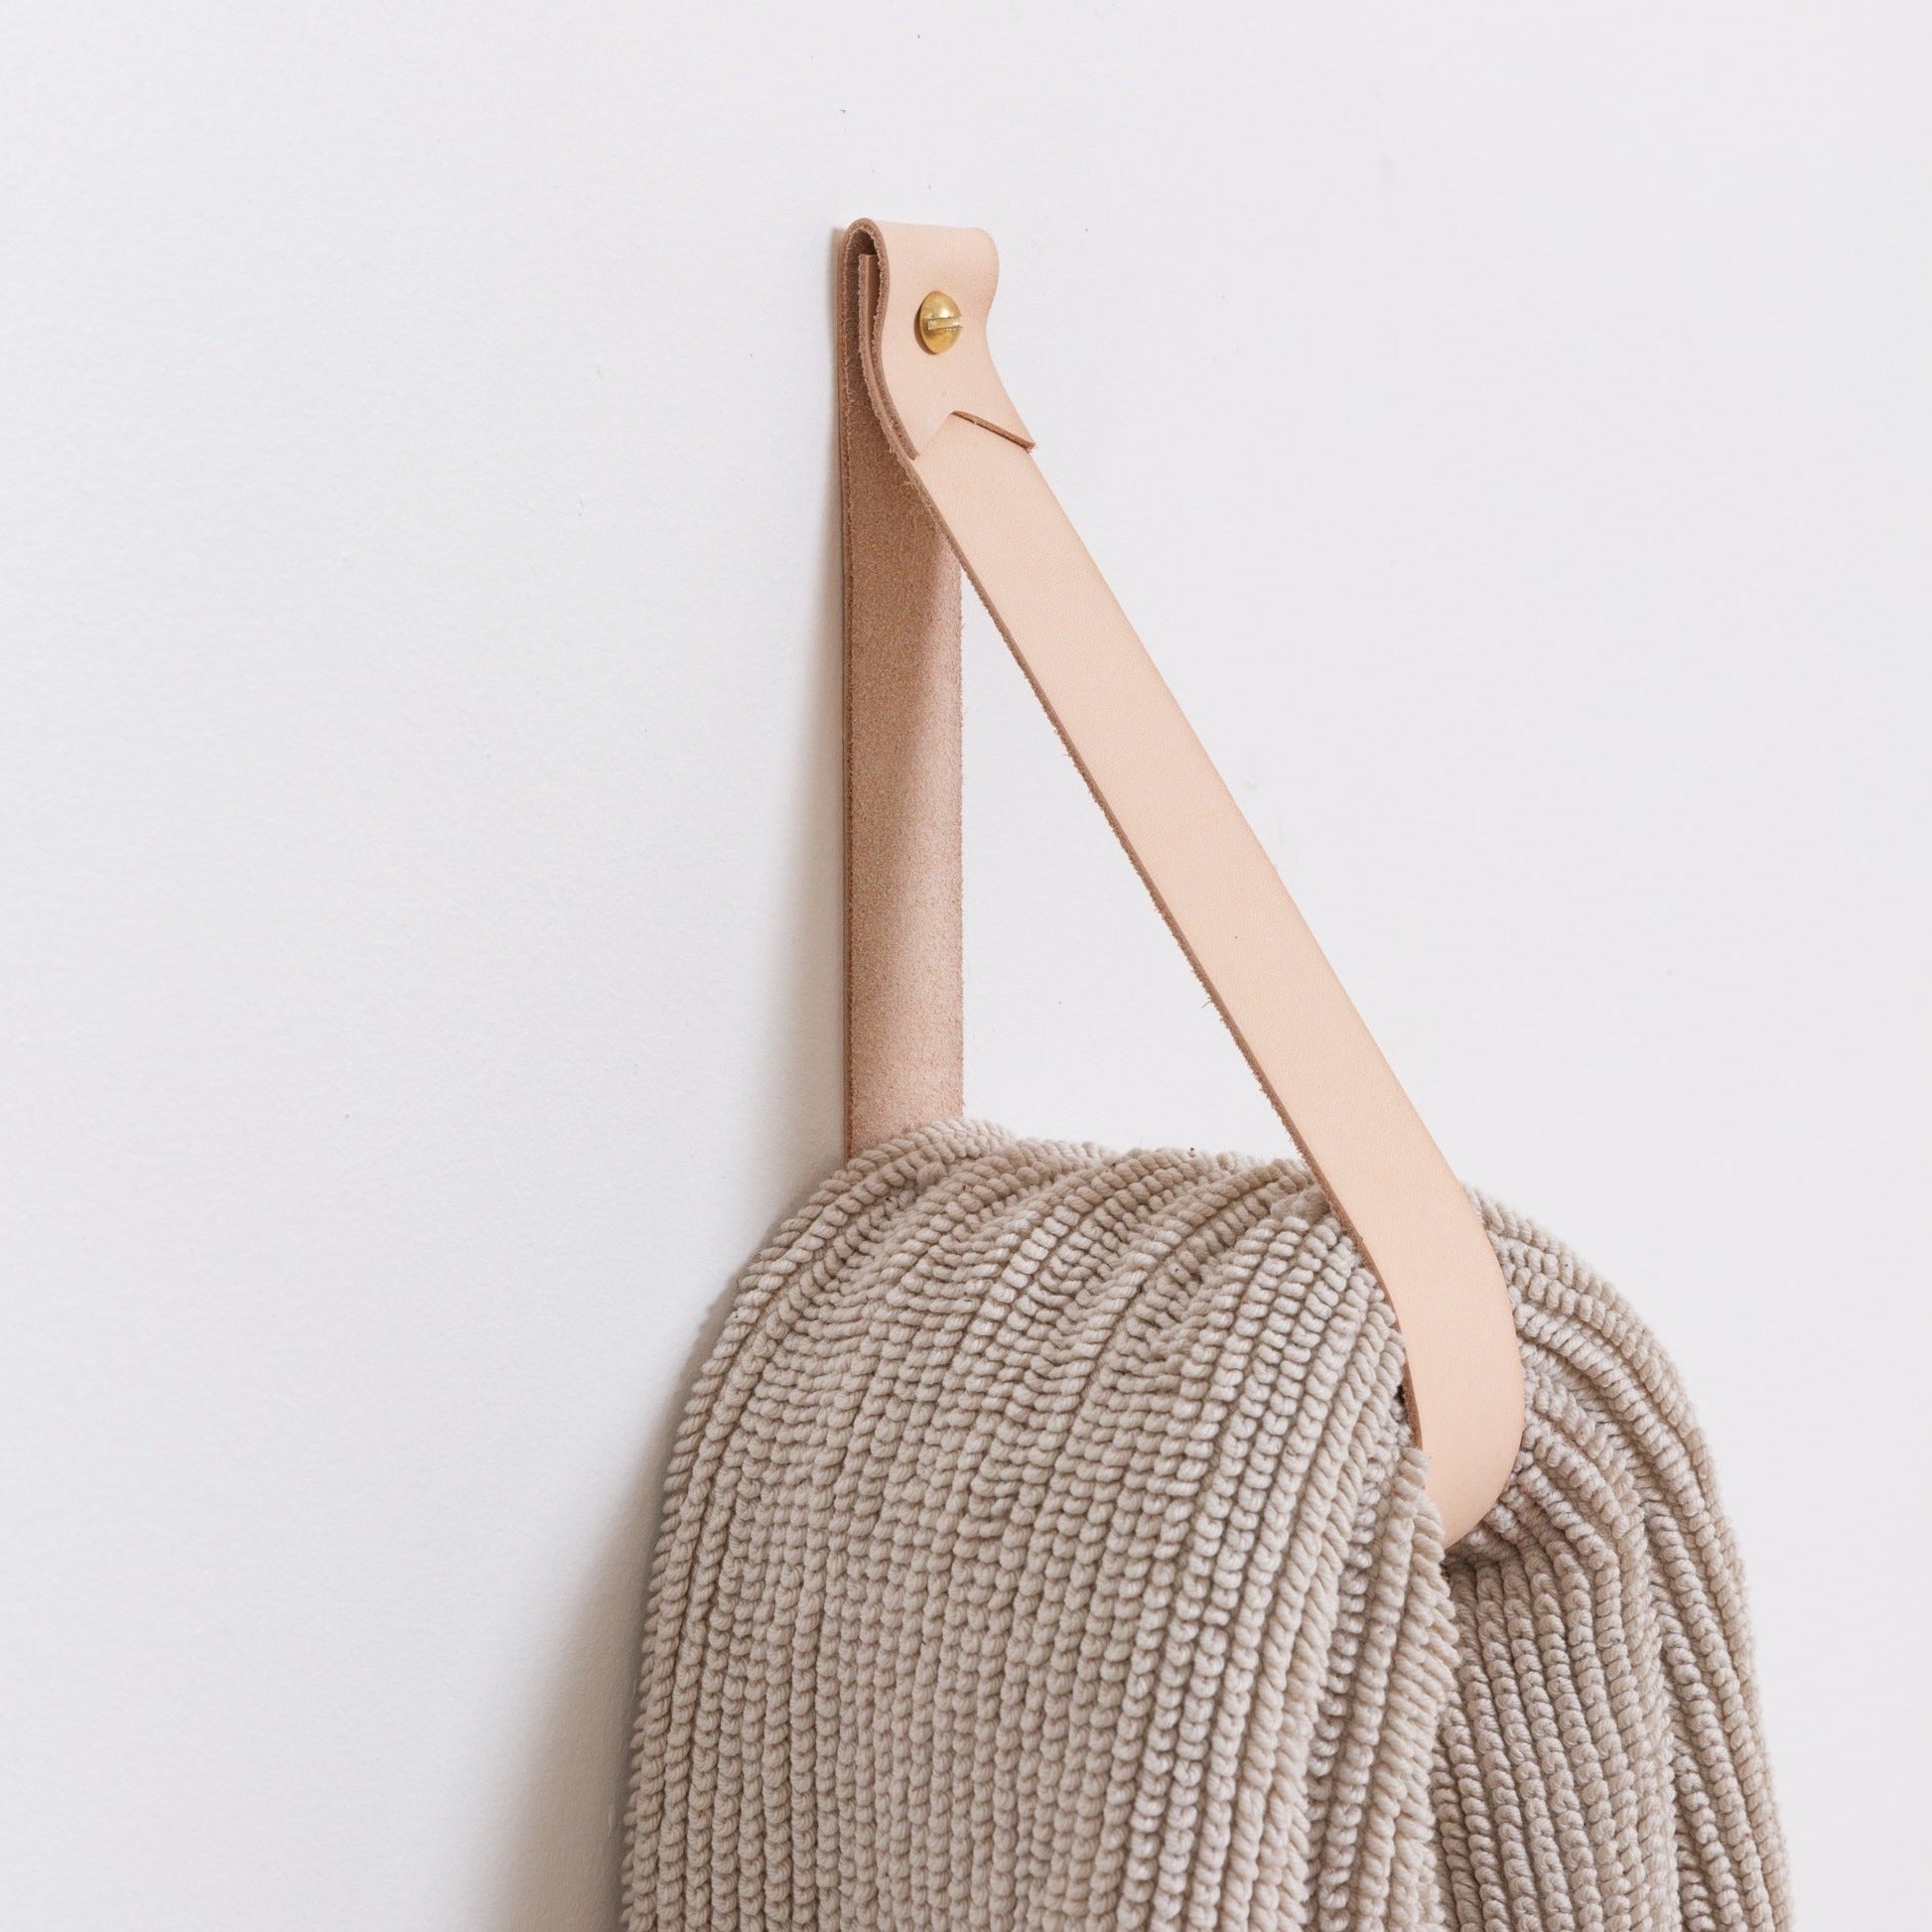 KEYAIIRA - Small Leather Wall Hook, wall hanging strap towel hook